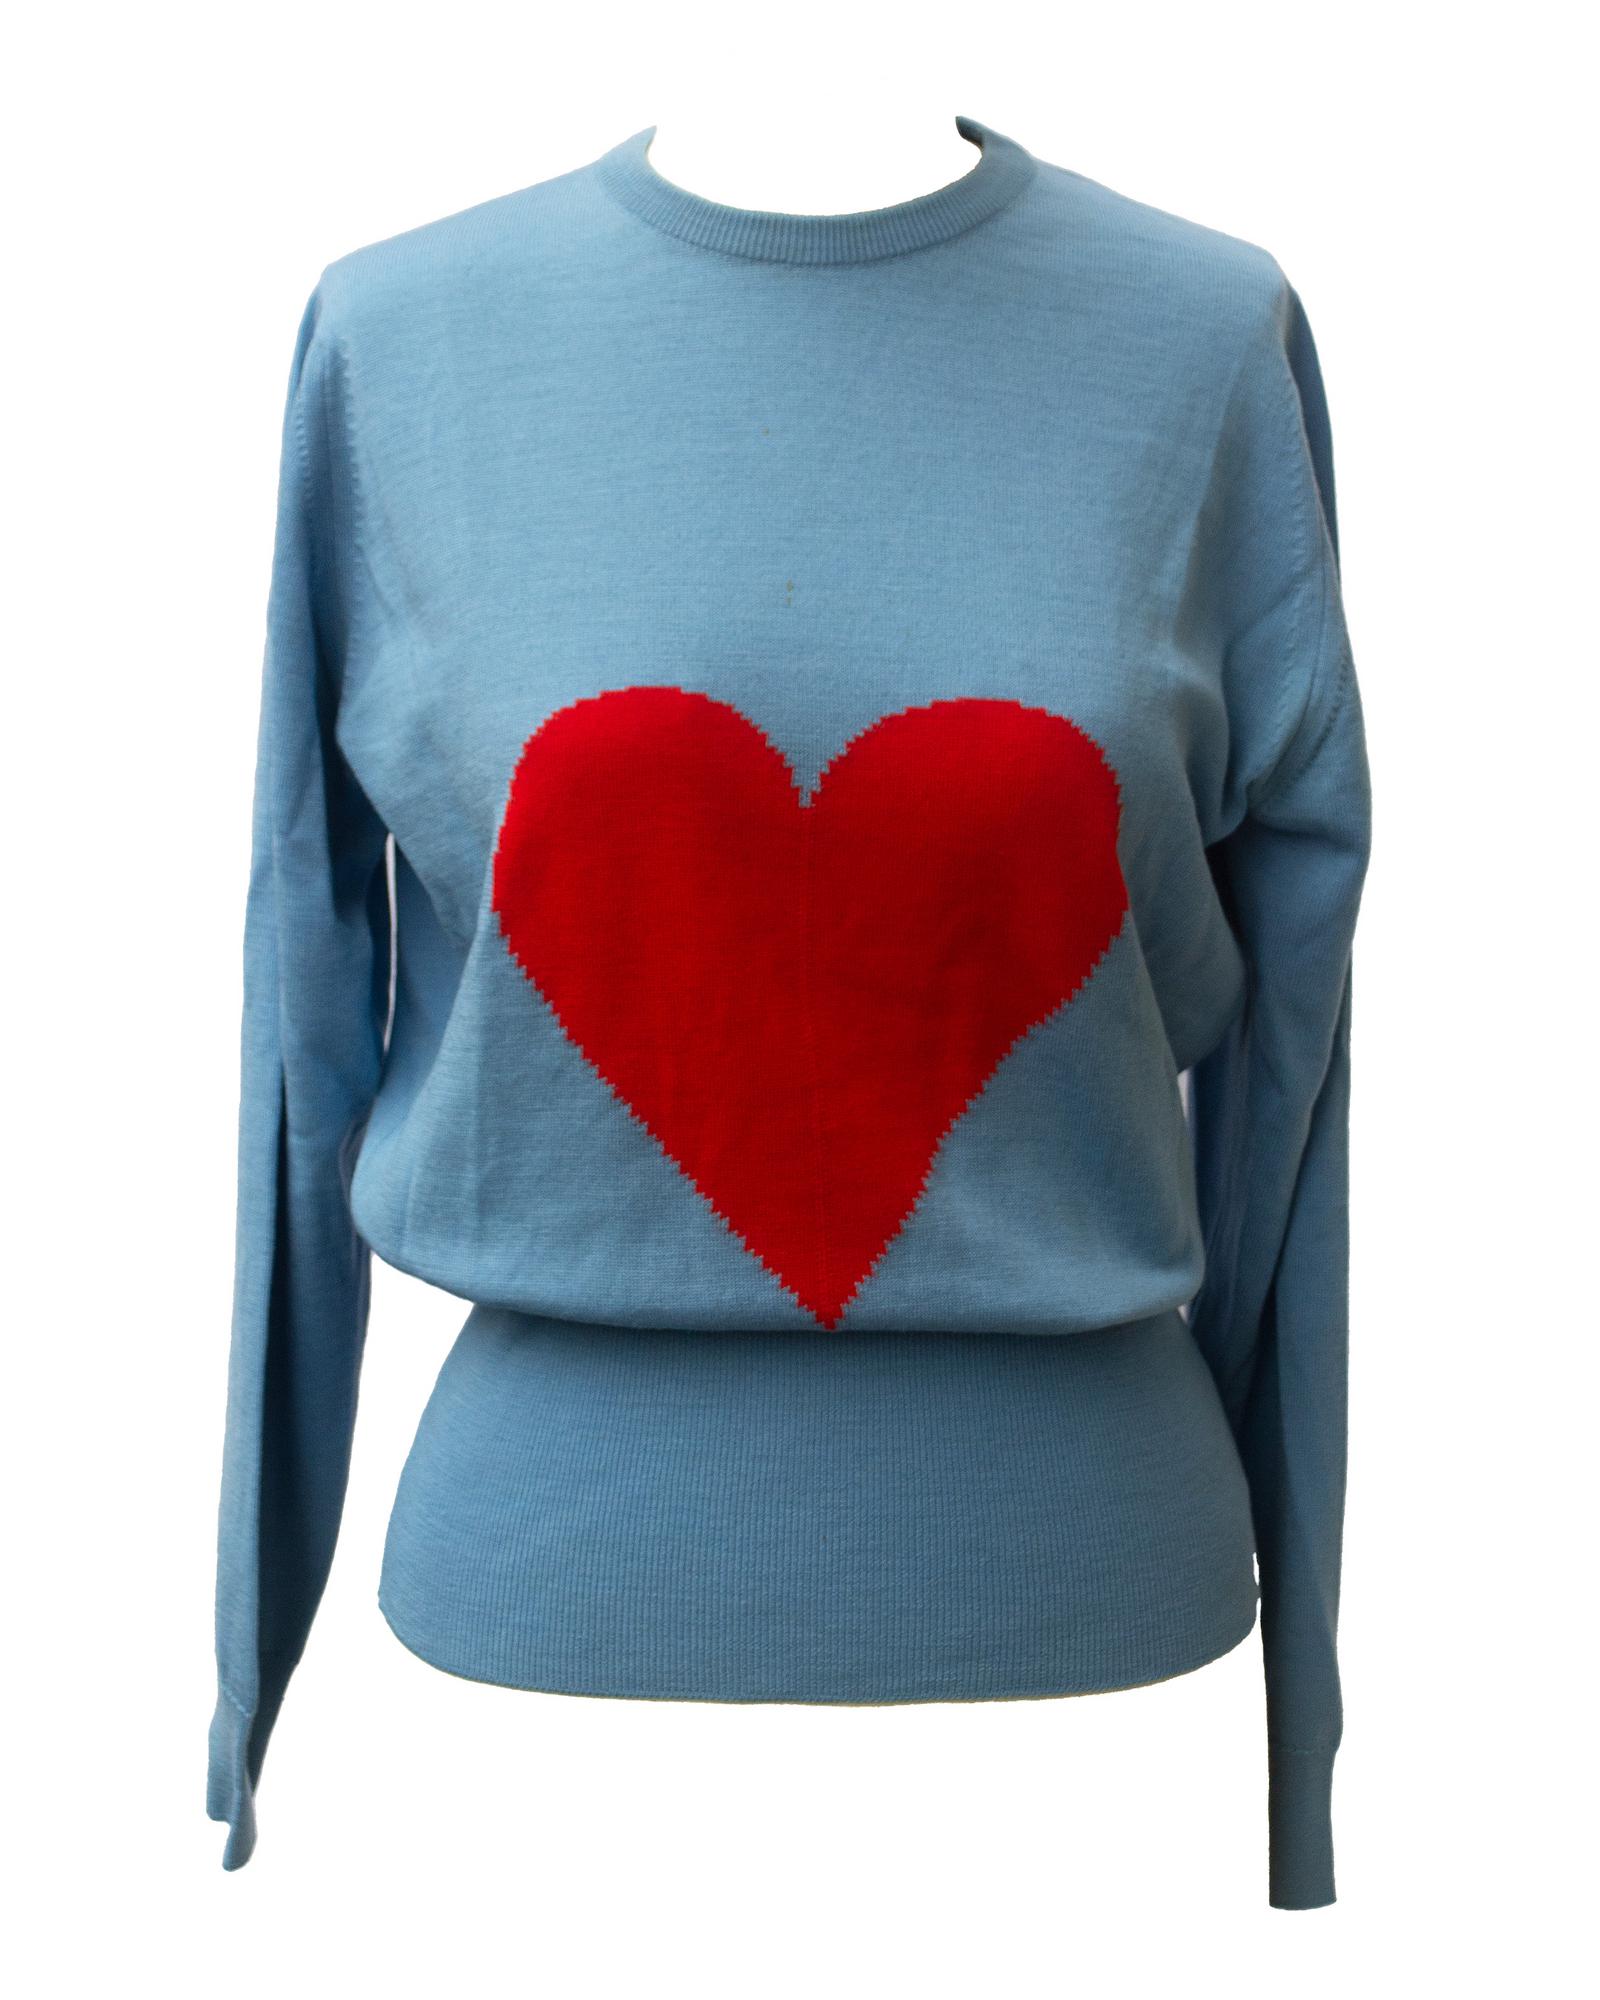 Vivienne Westwood HEART SWEATER Description: Red heart in blue sky background...